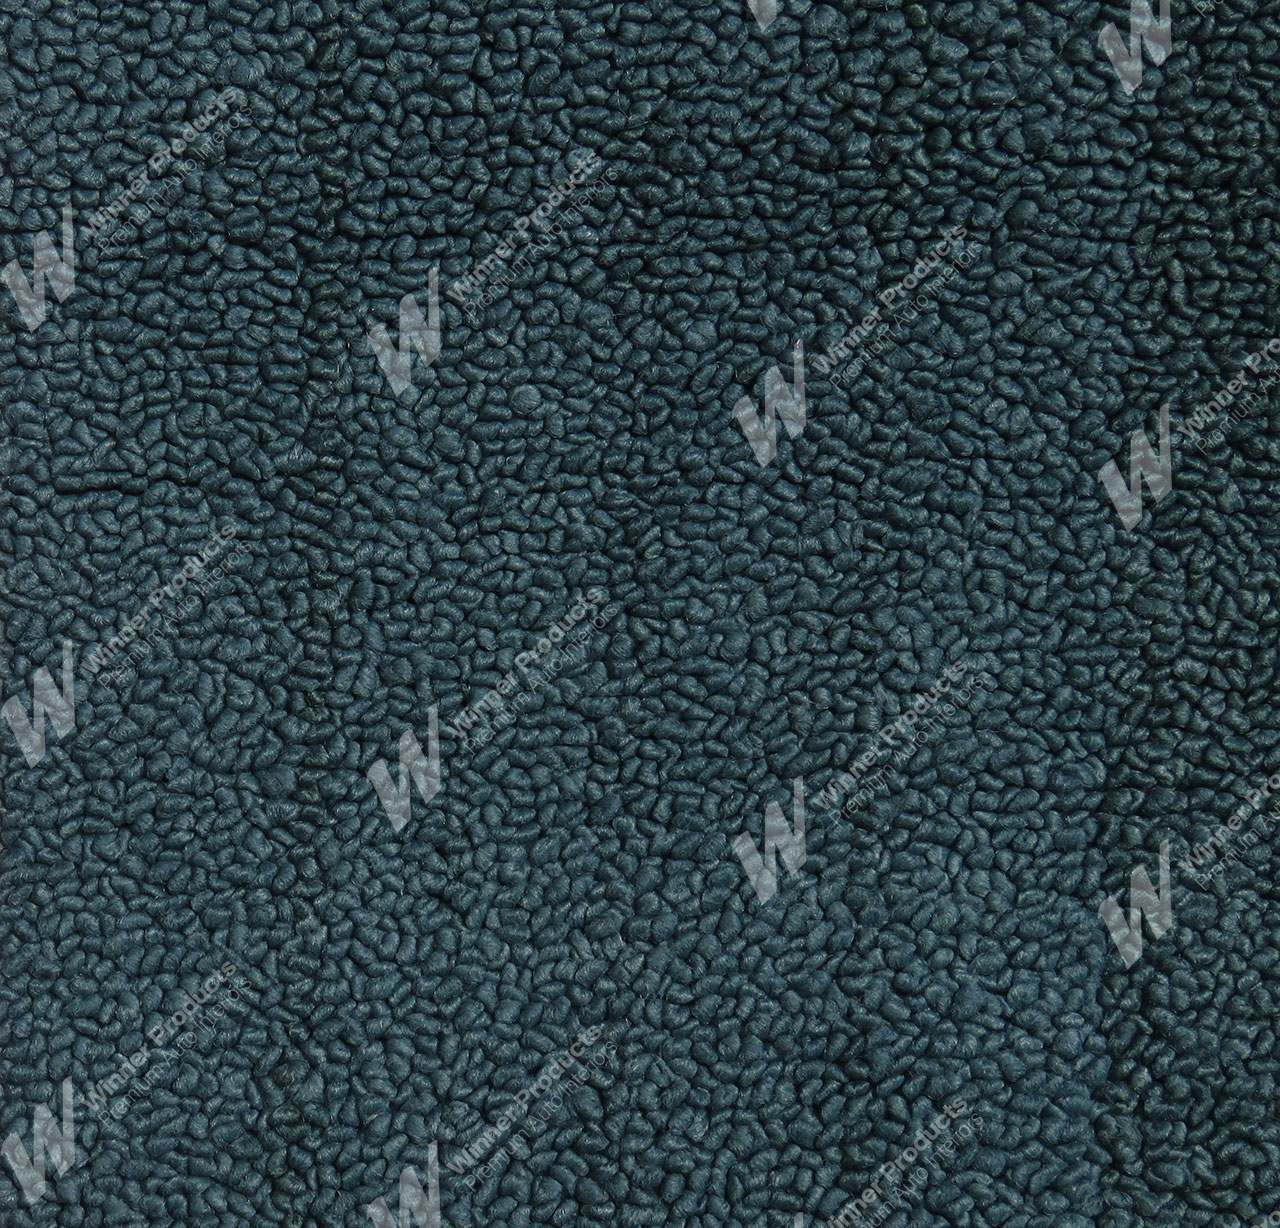 Holden Torana LC Torana S Sedan 43D Turquoise Mist Carpet (Image 1 of 1)